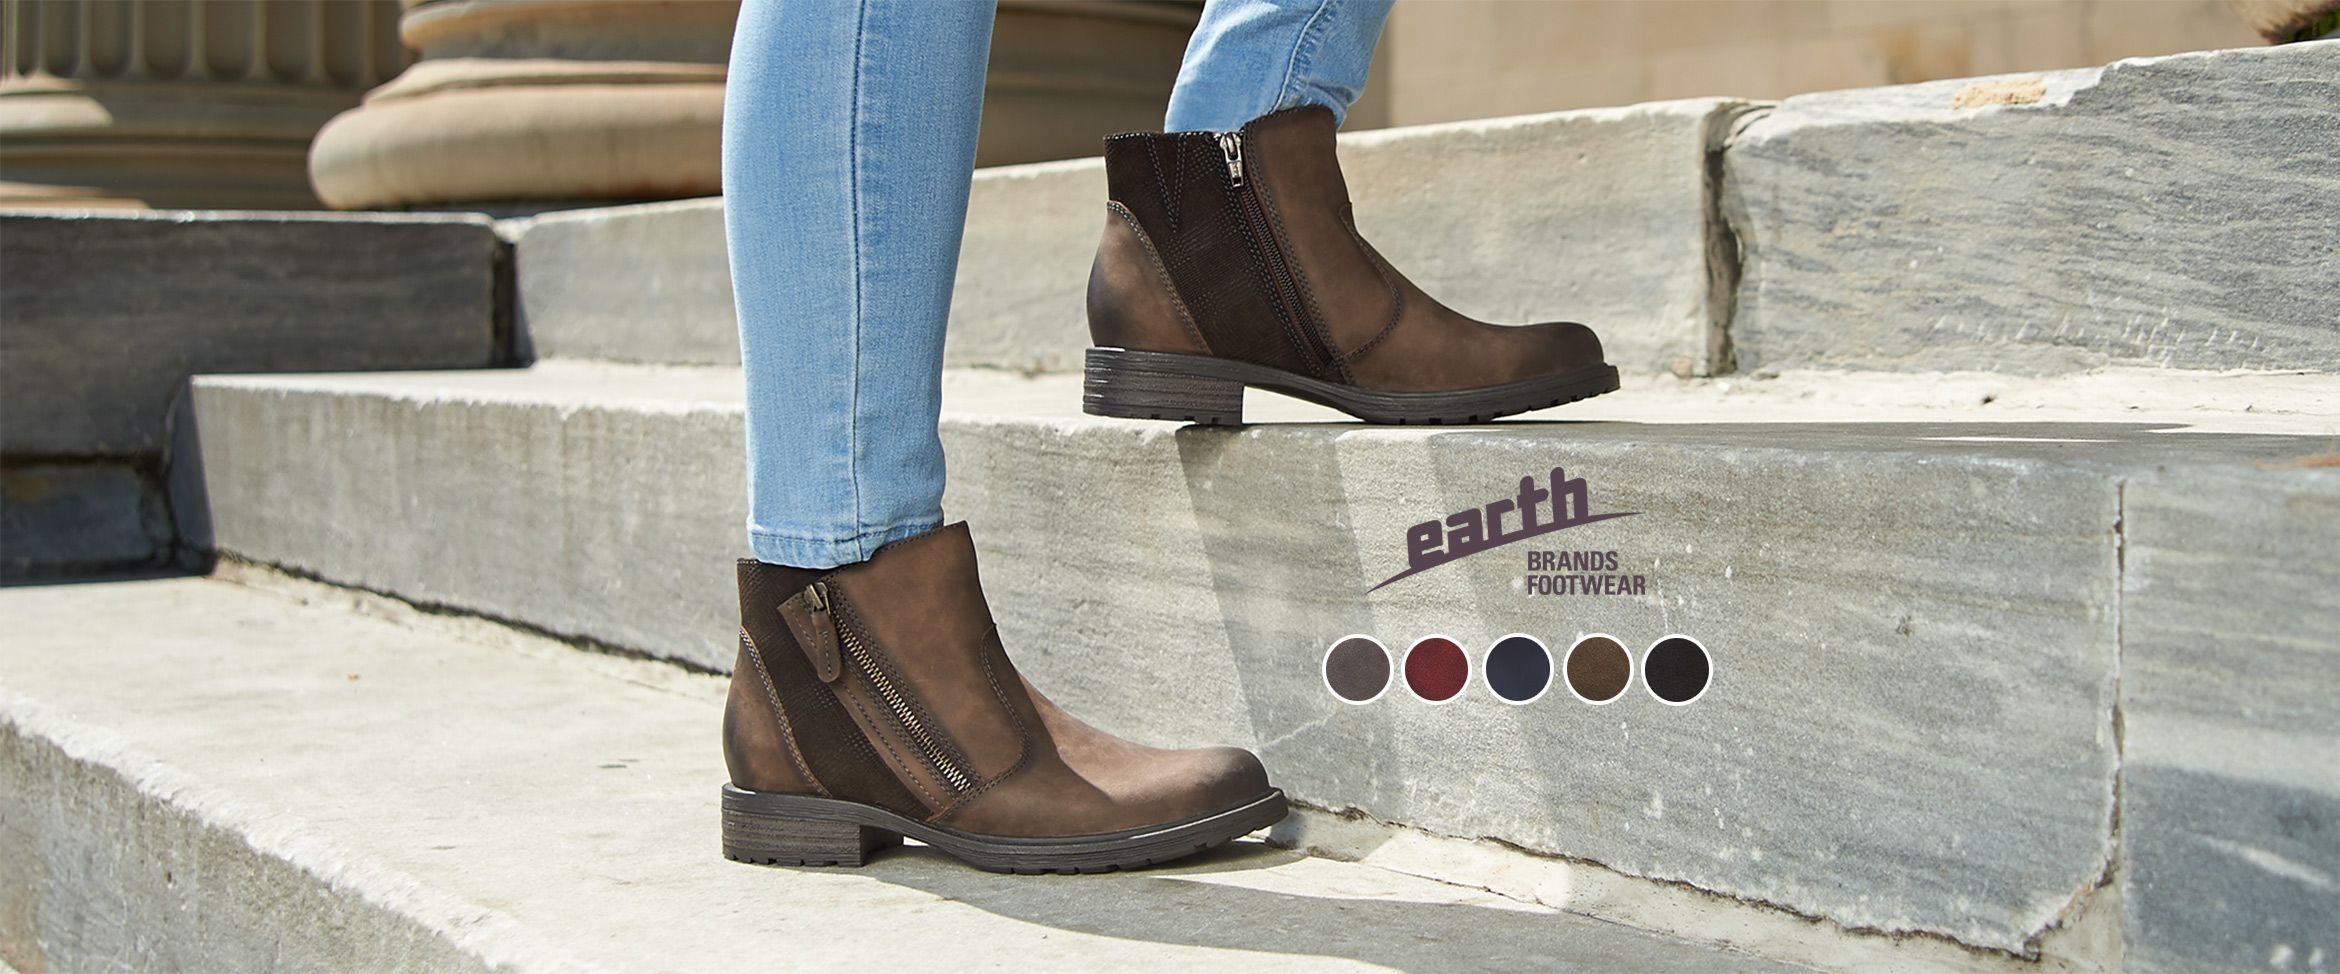 earth vintage leather ankle boots jordan